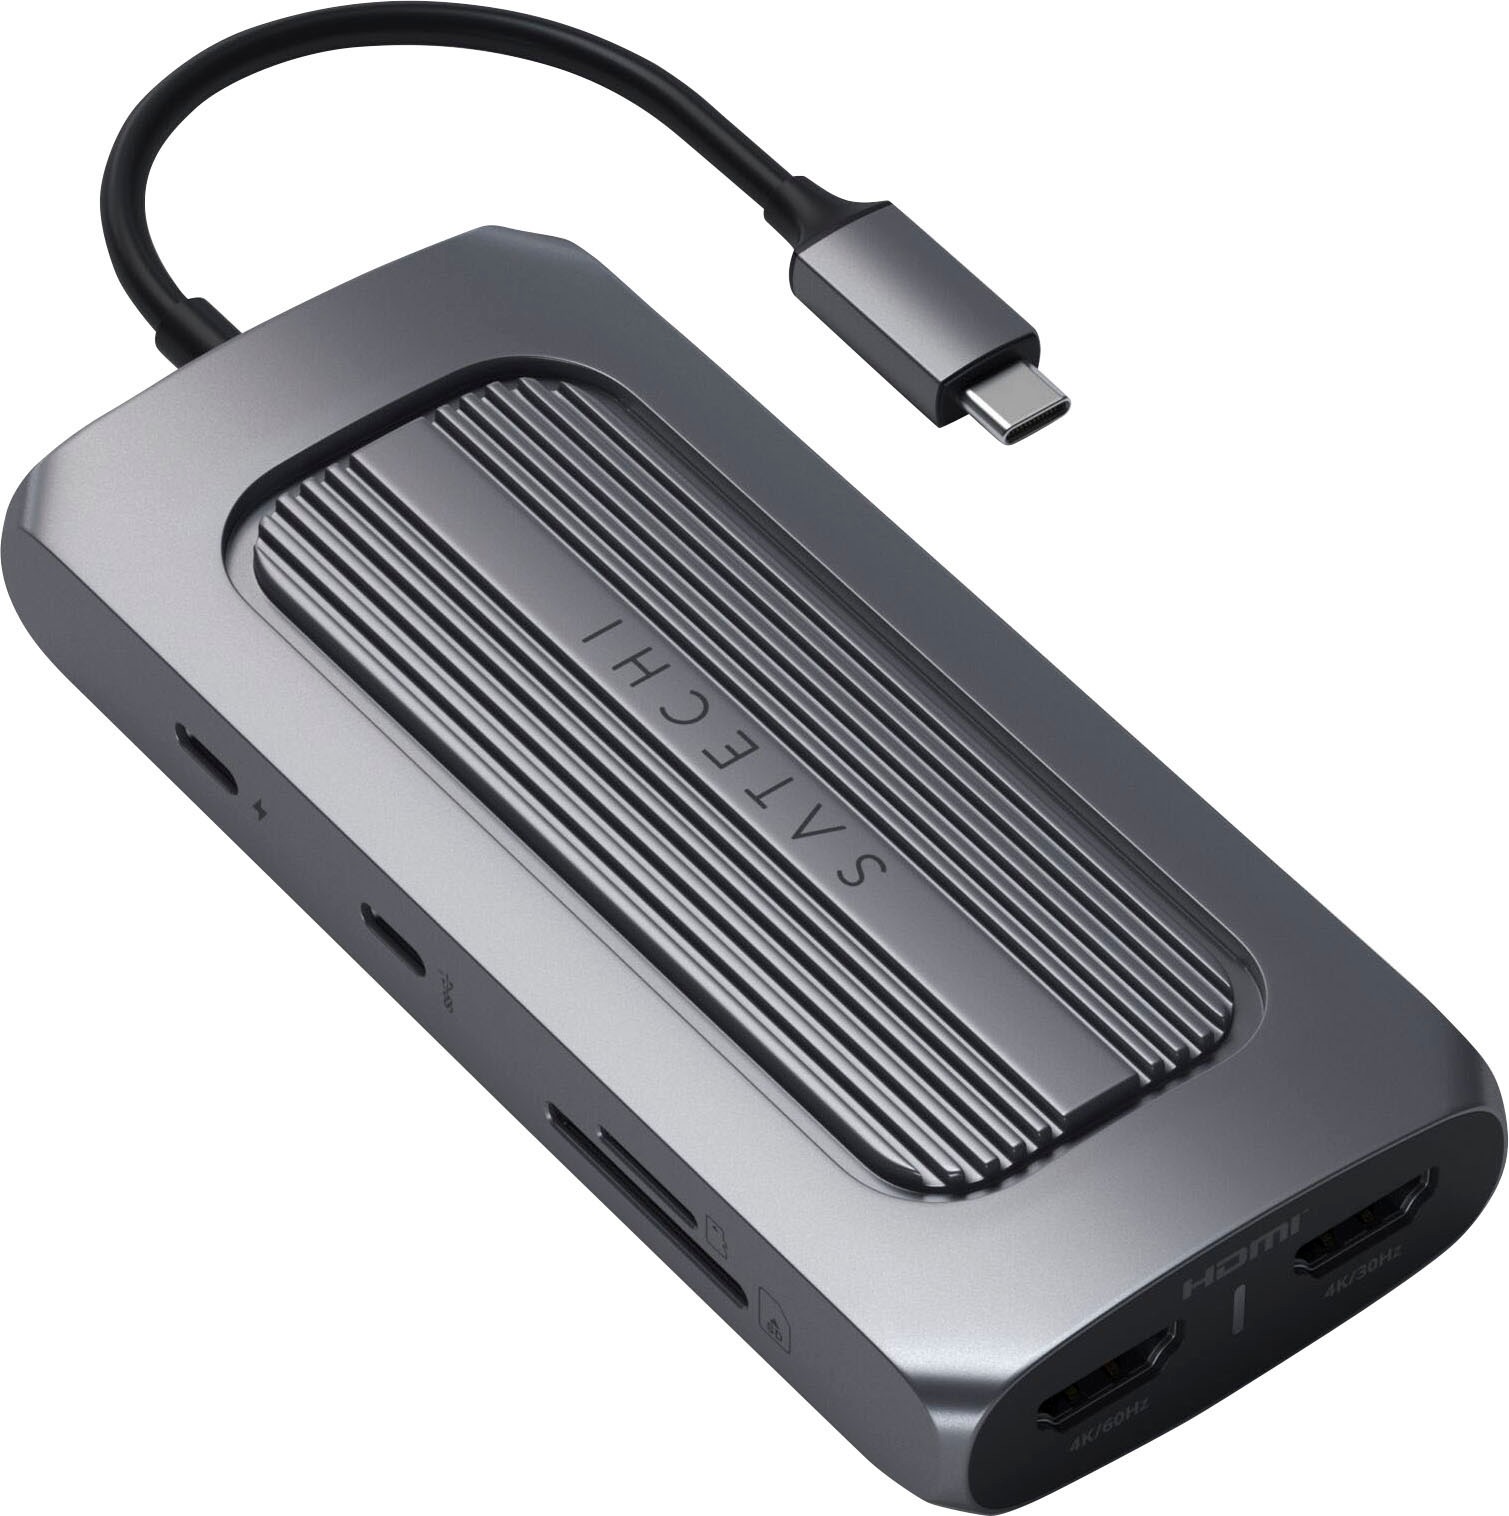 Satechi USB-Adapter »USB-C Multiport MX«, USB 3.0 Typ A-RJ-45 (Ethernet) zu USB Typ C